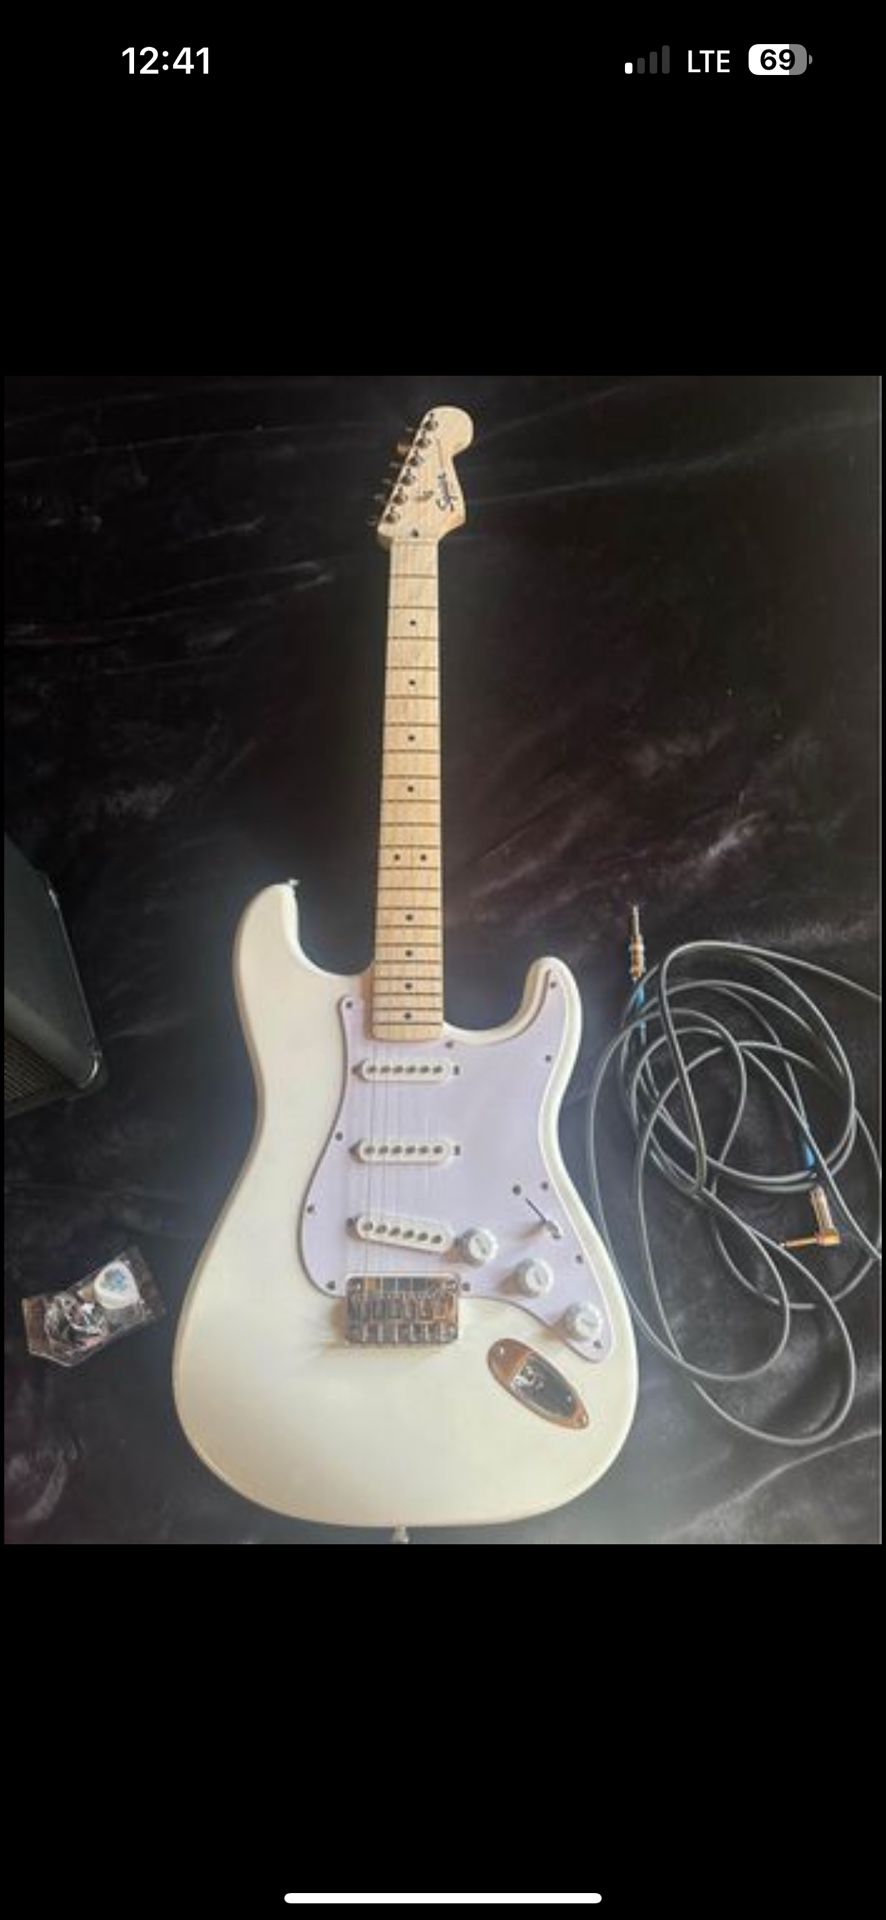 Squier Stratocaster Guitar 